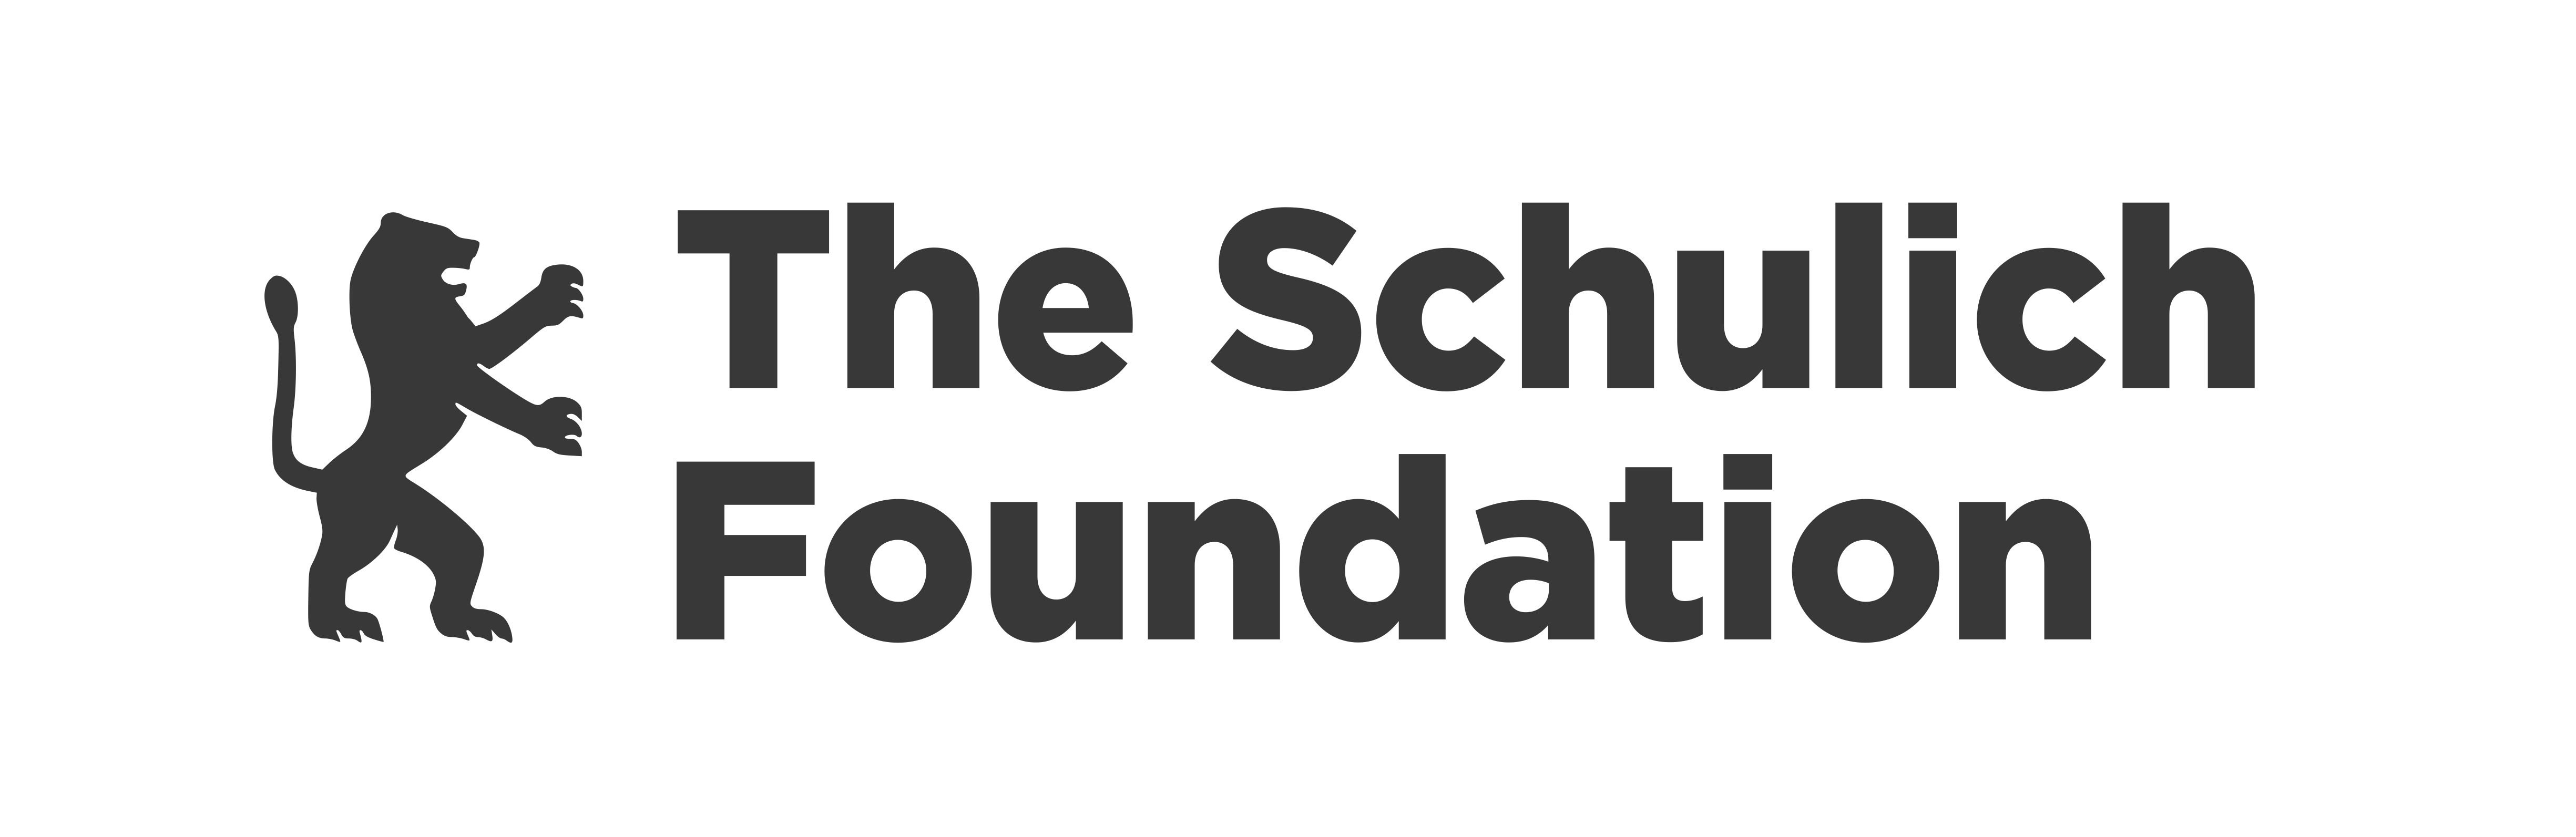 The Schulich Foundation